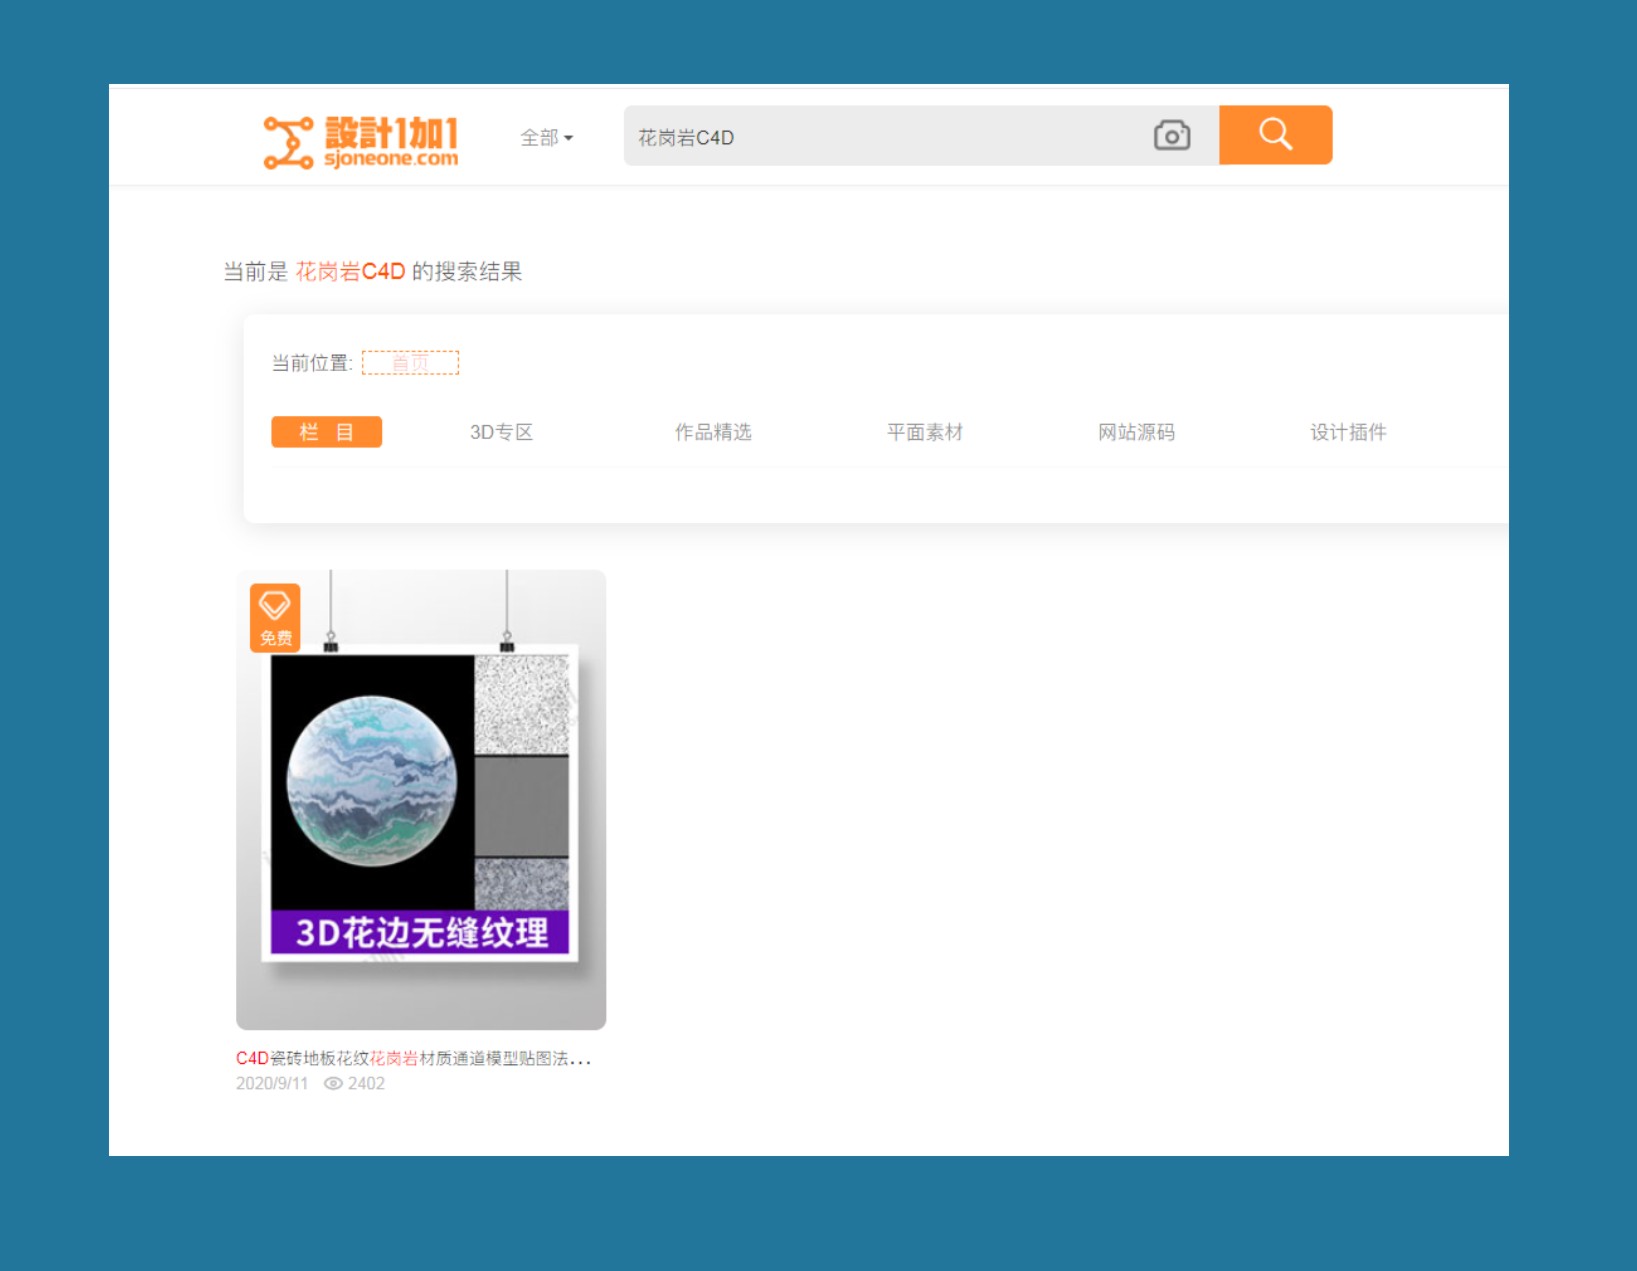 wordpress智能中文搜索系统专业版intsearch，让客户搜索更多相关内容